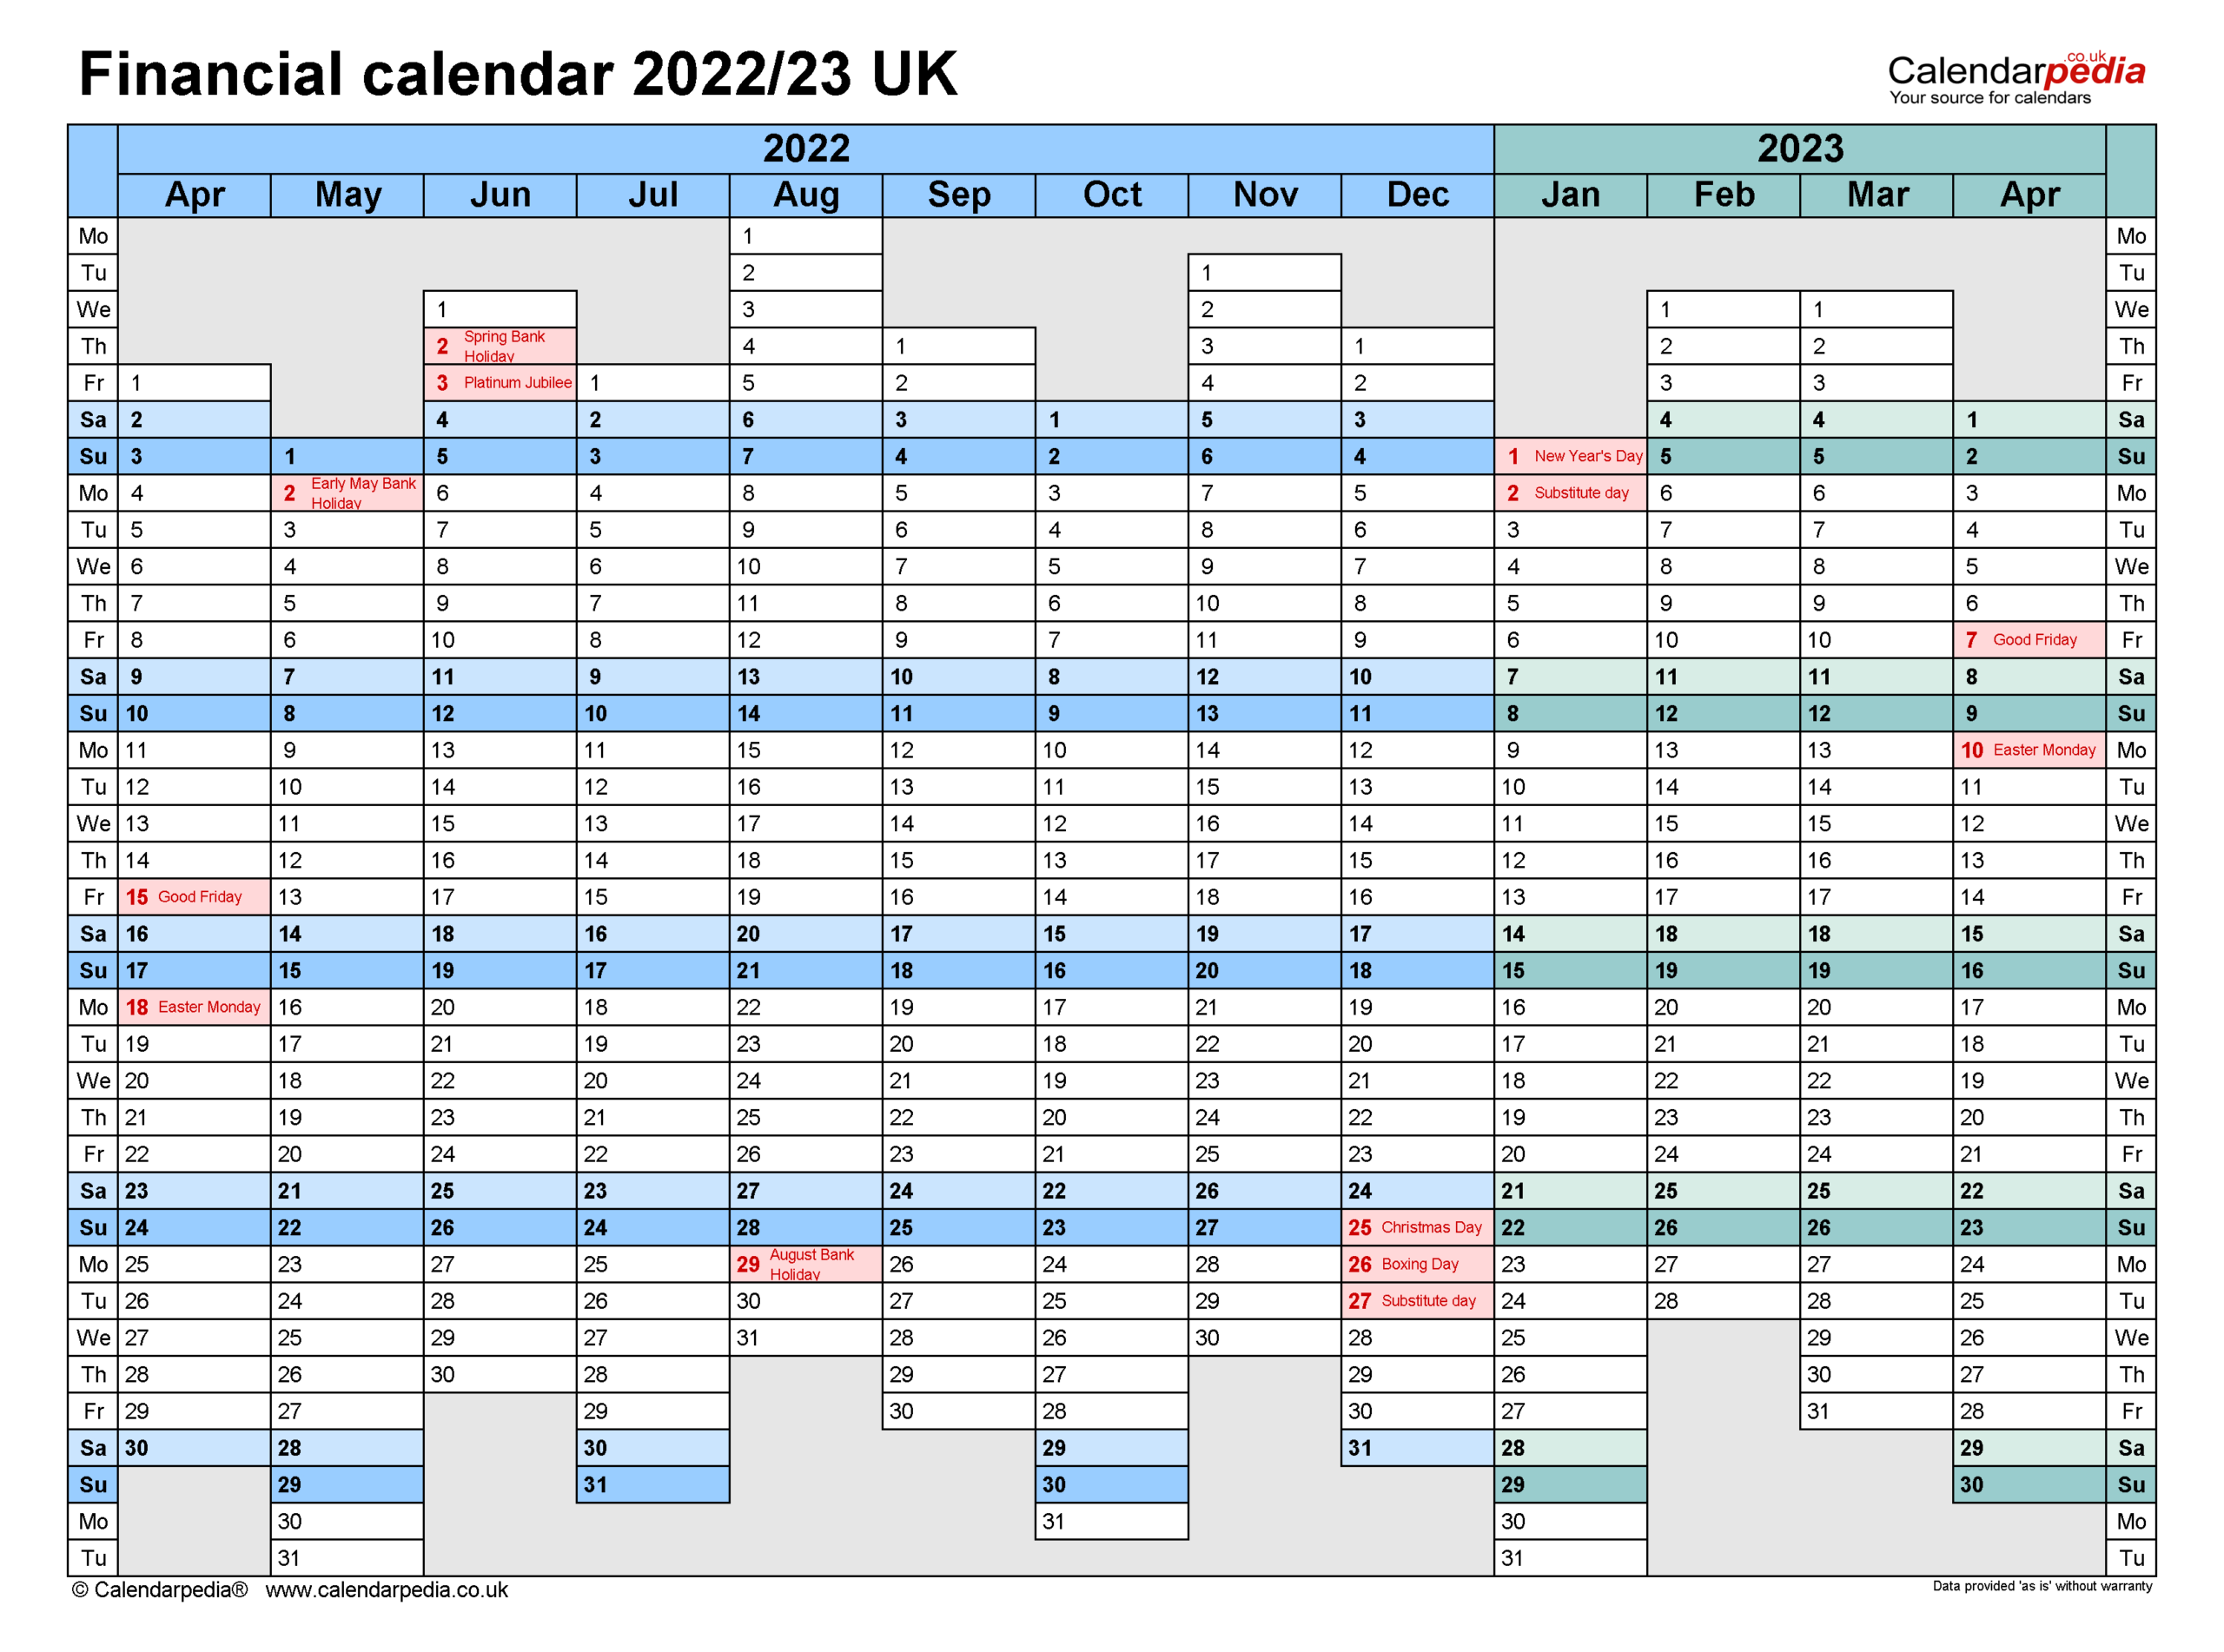 Financial Calendars 2022/23 Uk In Pdf Format-2022 Calendar Uk Printable With Bank Holidays